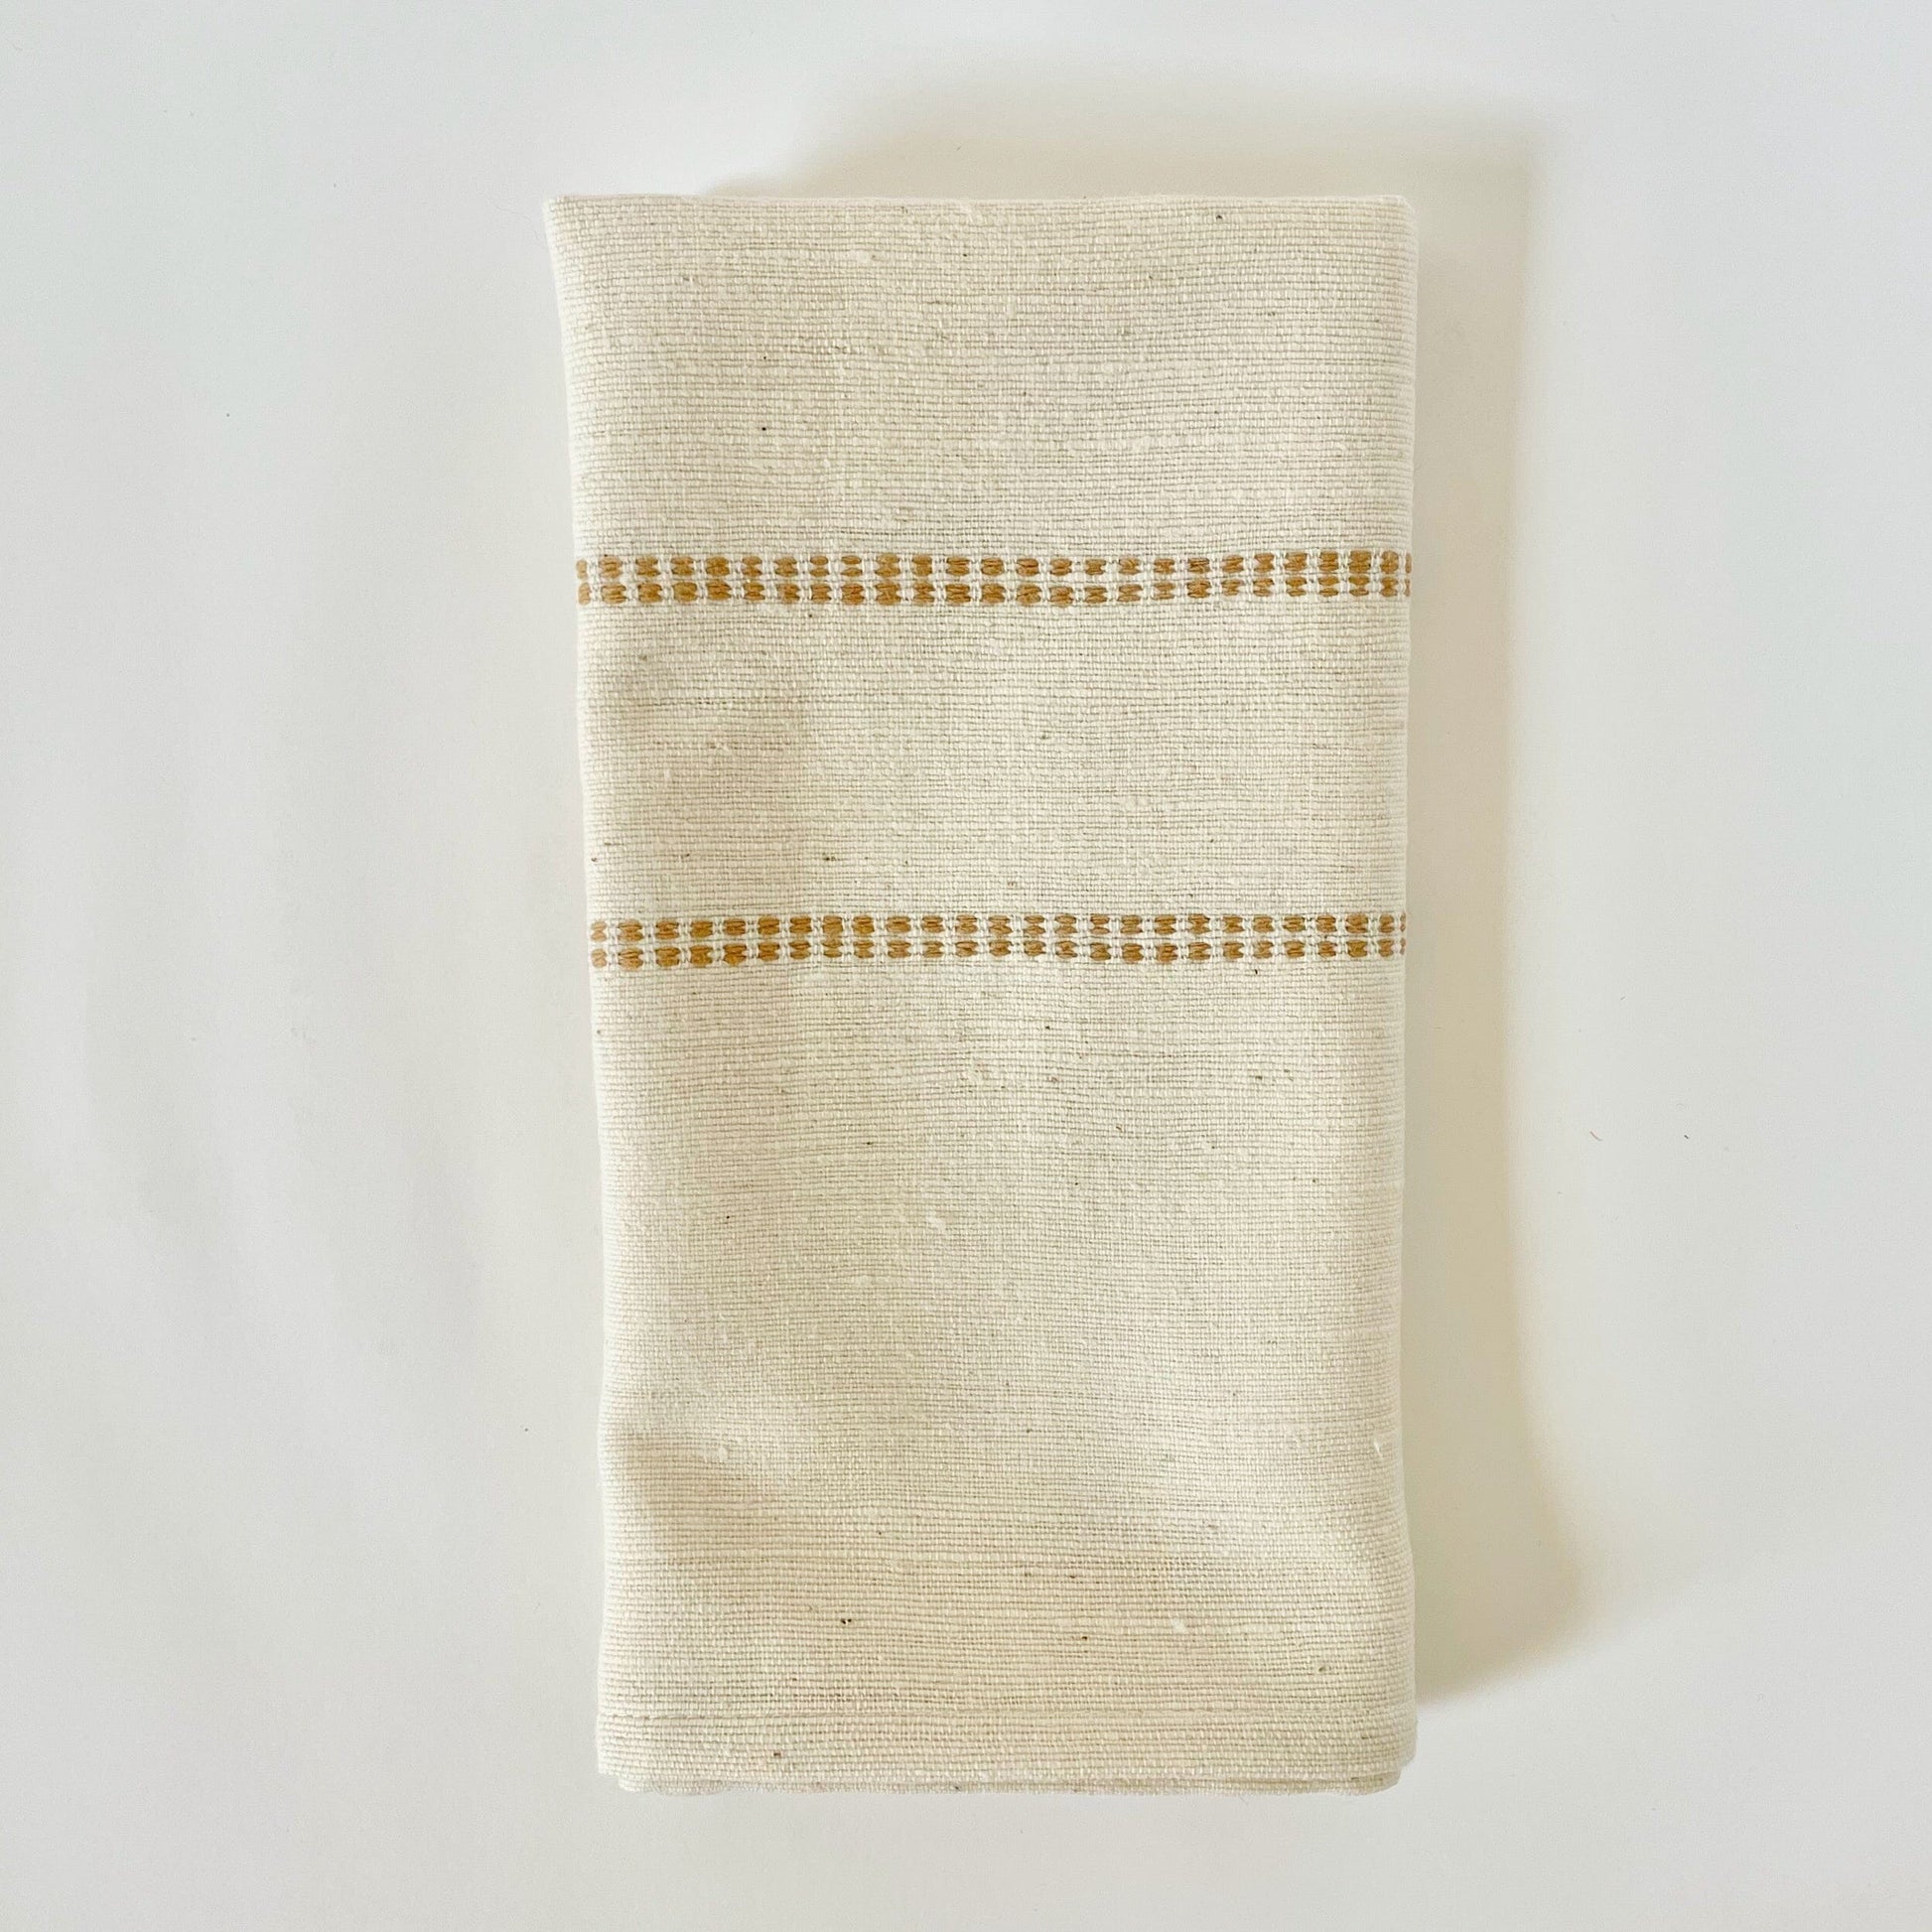 Chamo handwoven Ethiopian cotton napkins Napkins sabahar Beige 